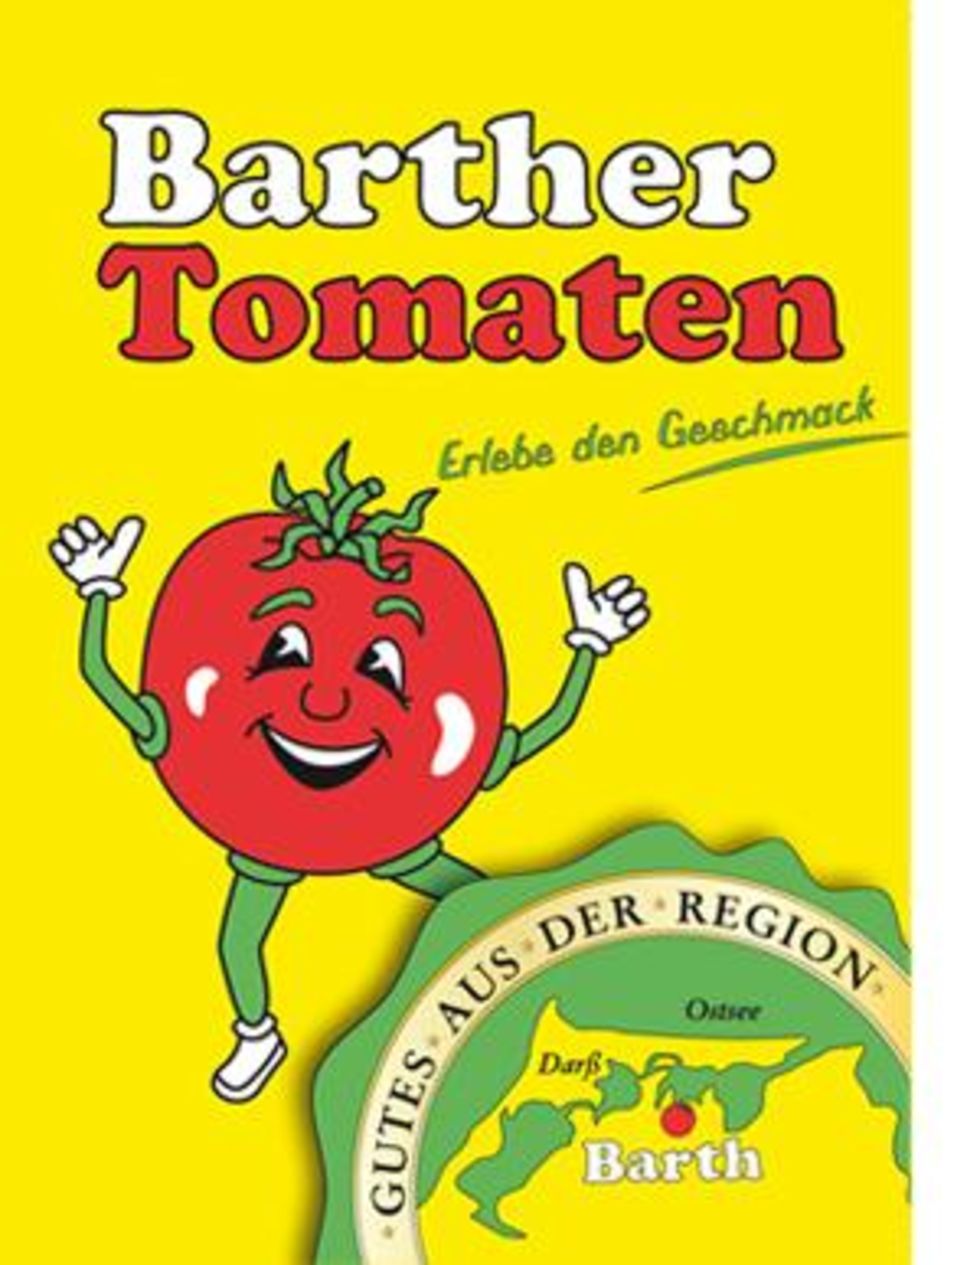 barther-tomaten